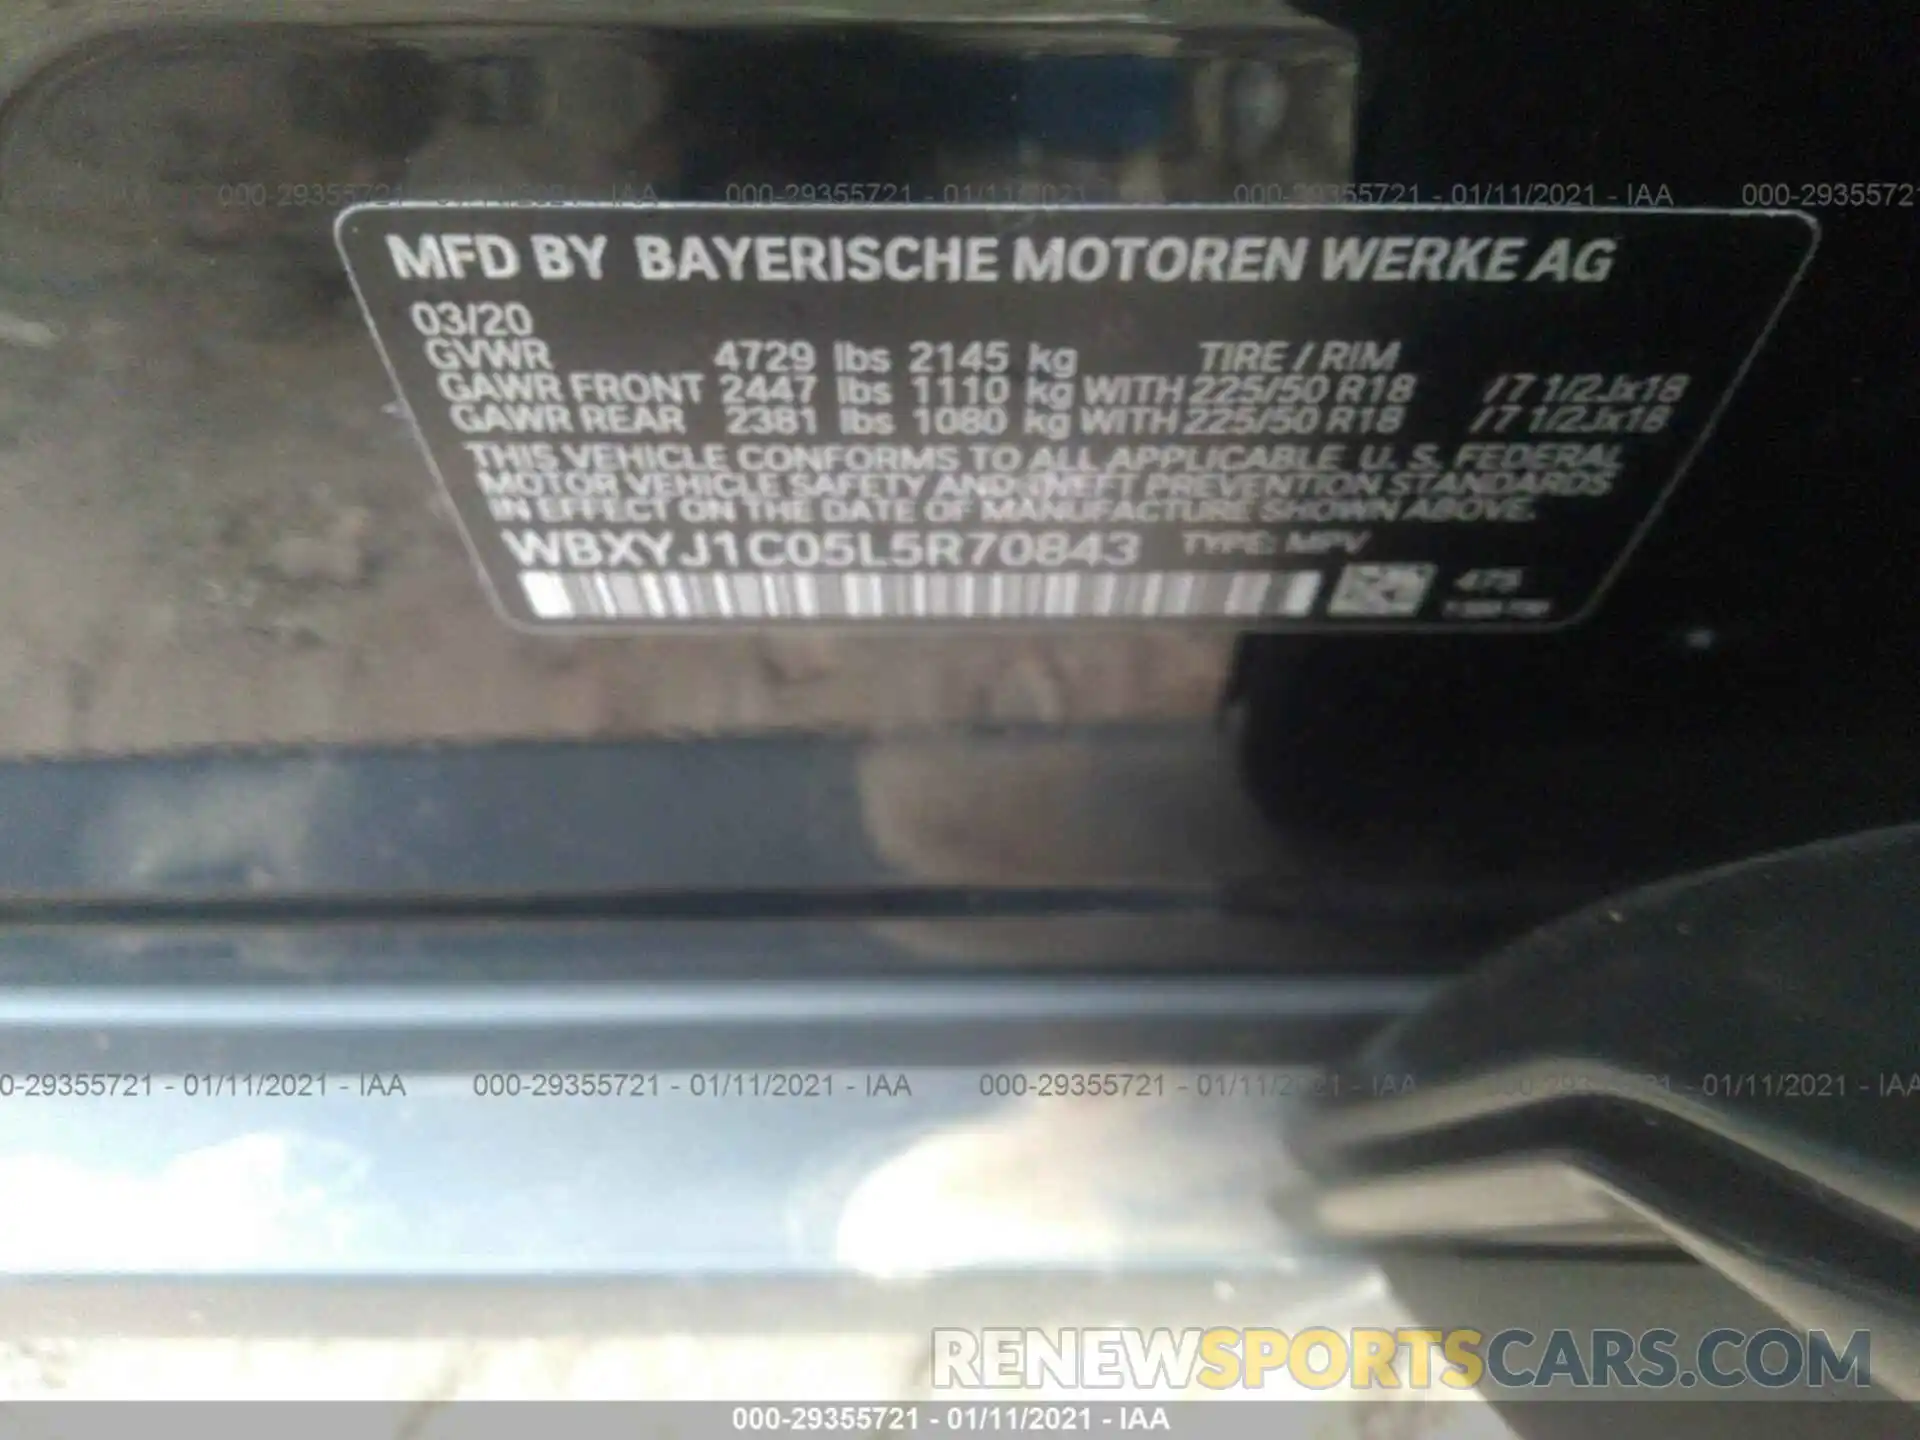 9 Фотография поврежденного автомобиля WBXYJ1C05L5R70843 BMW X2 2020